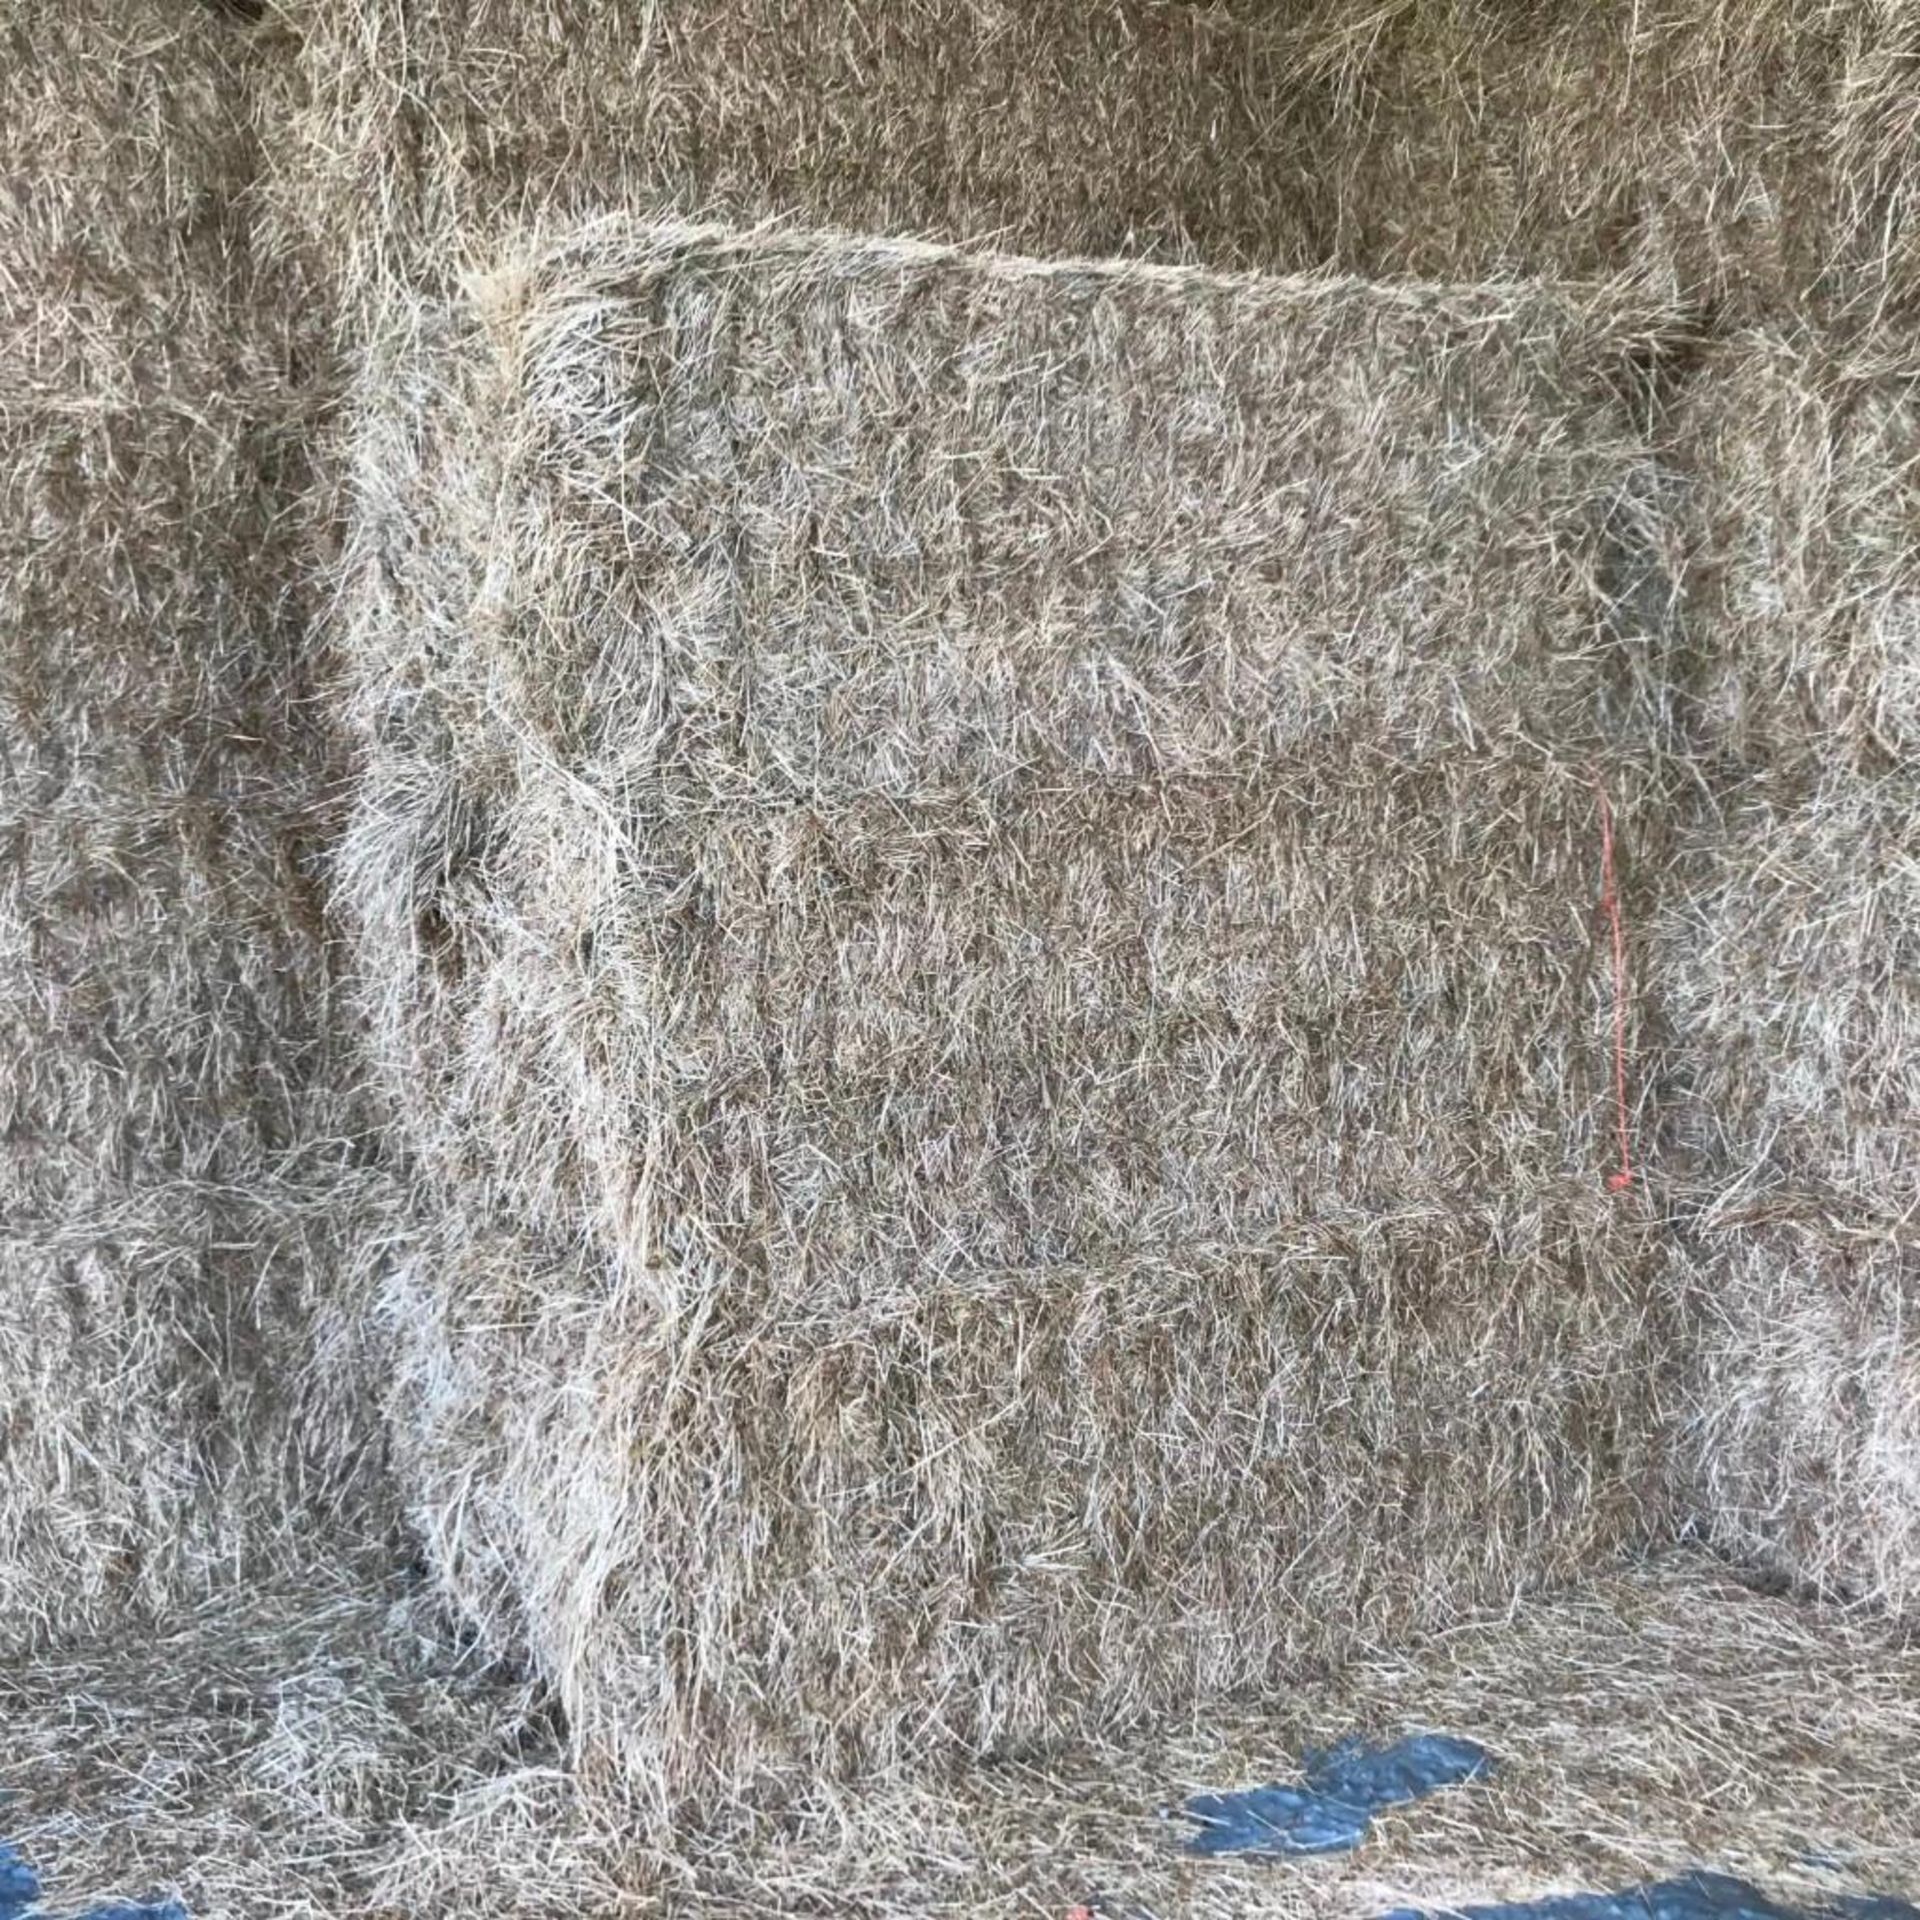 40 Heston Bales of Hay - Image 12 of 12